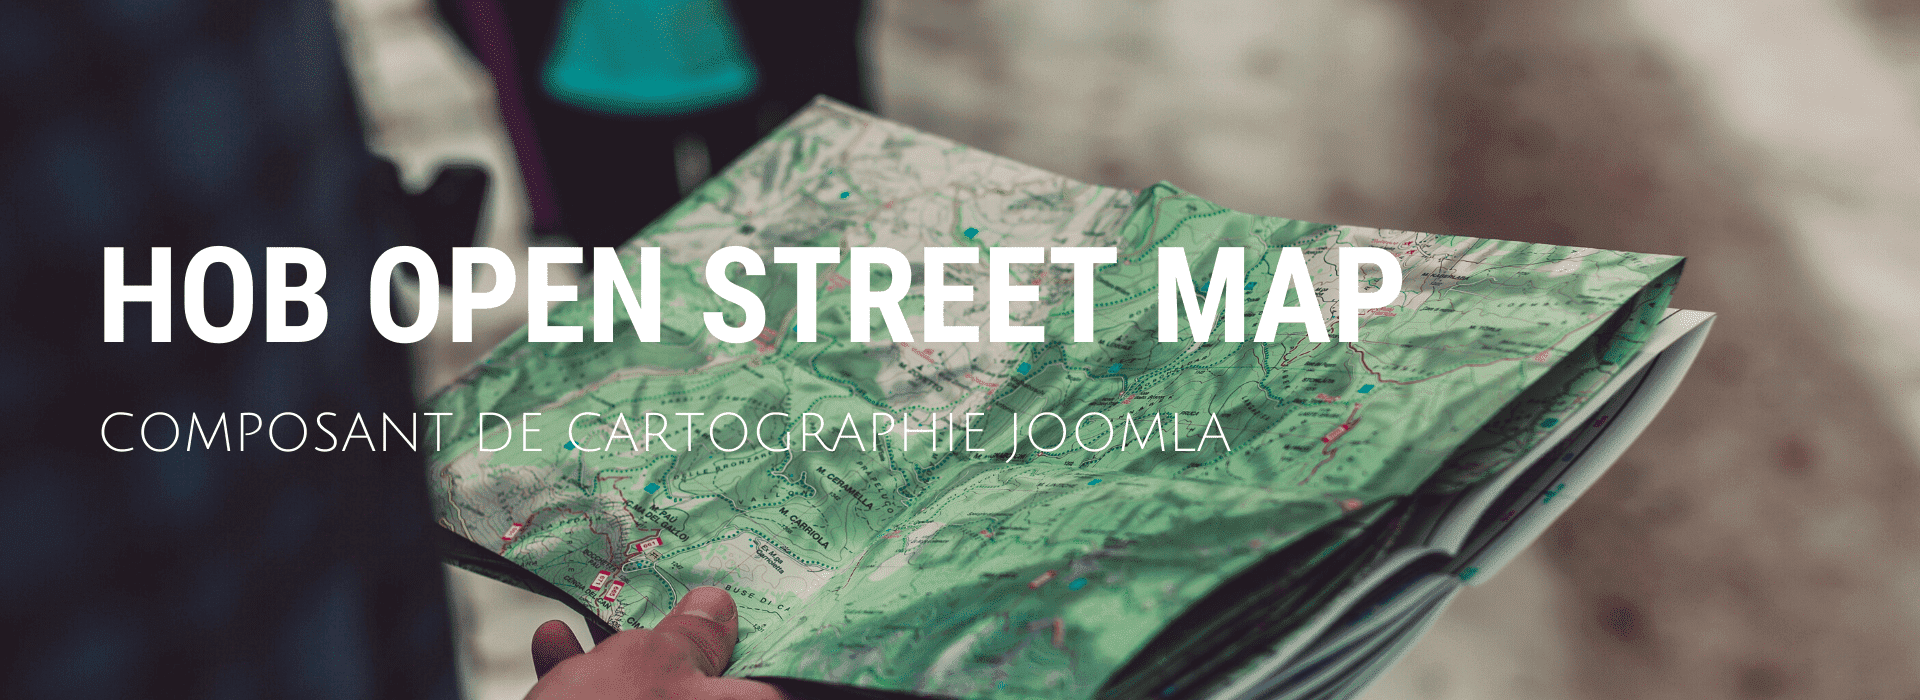 Composant HOB Open Street Map : catographie Joomla